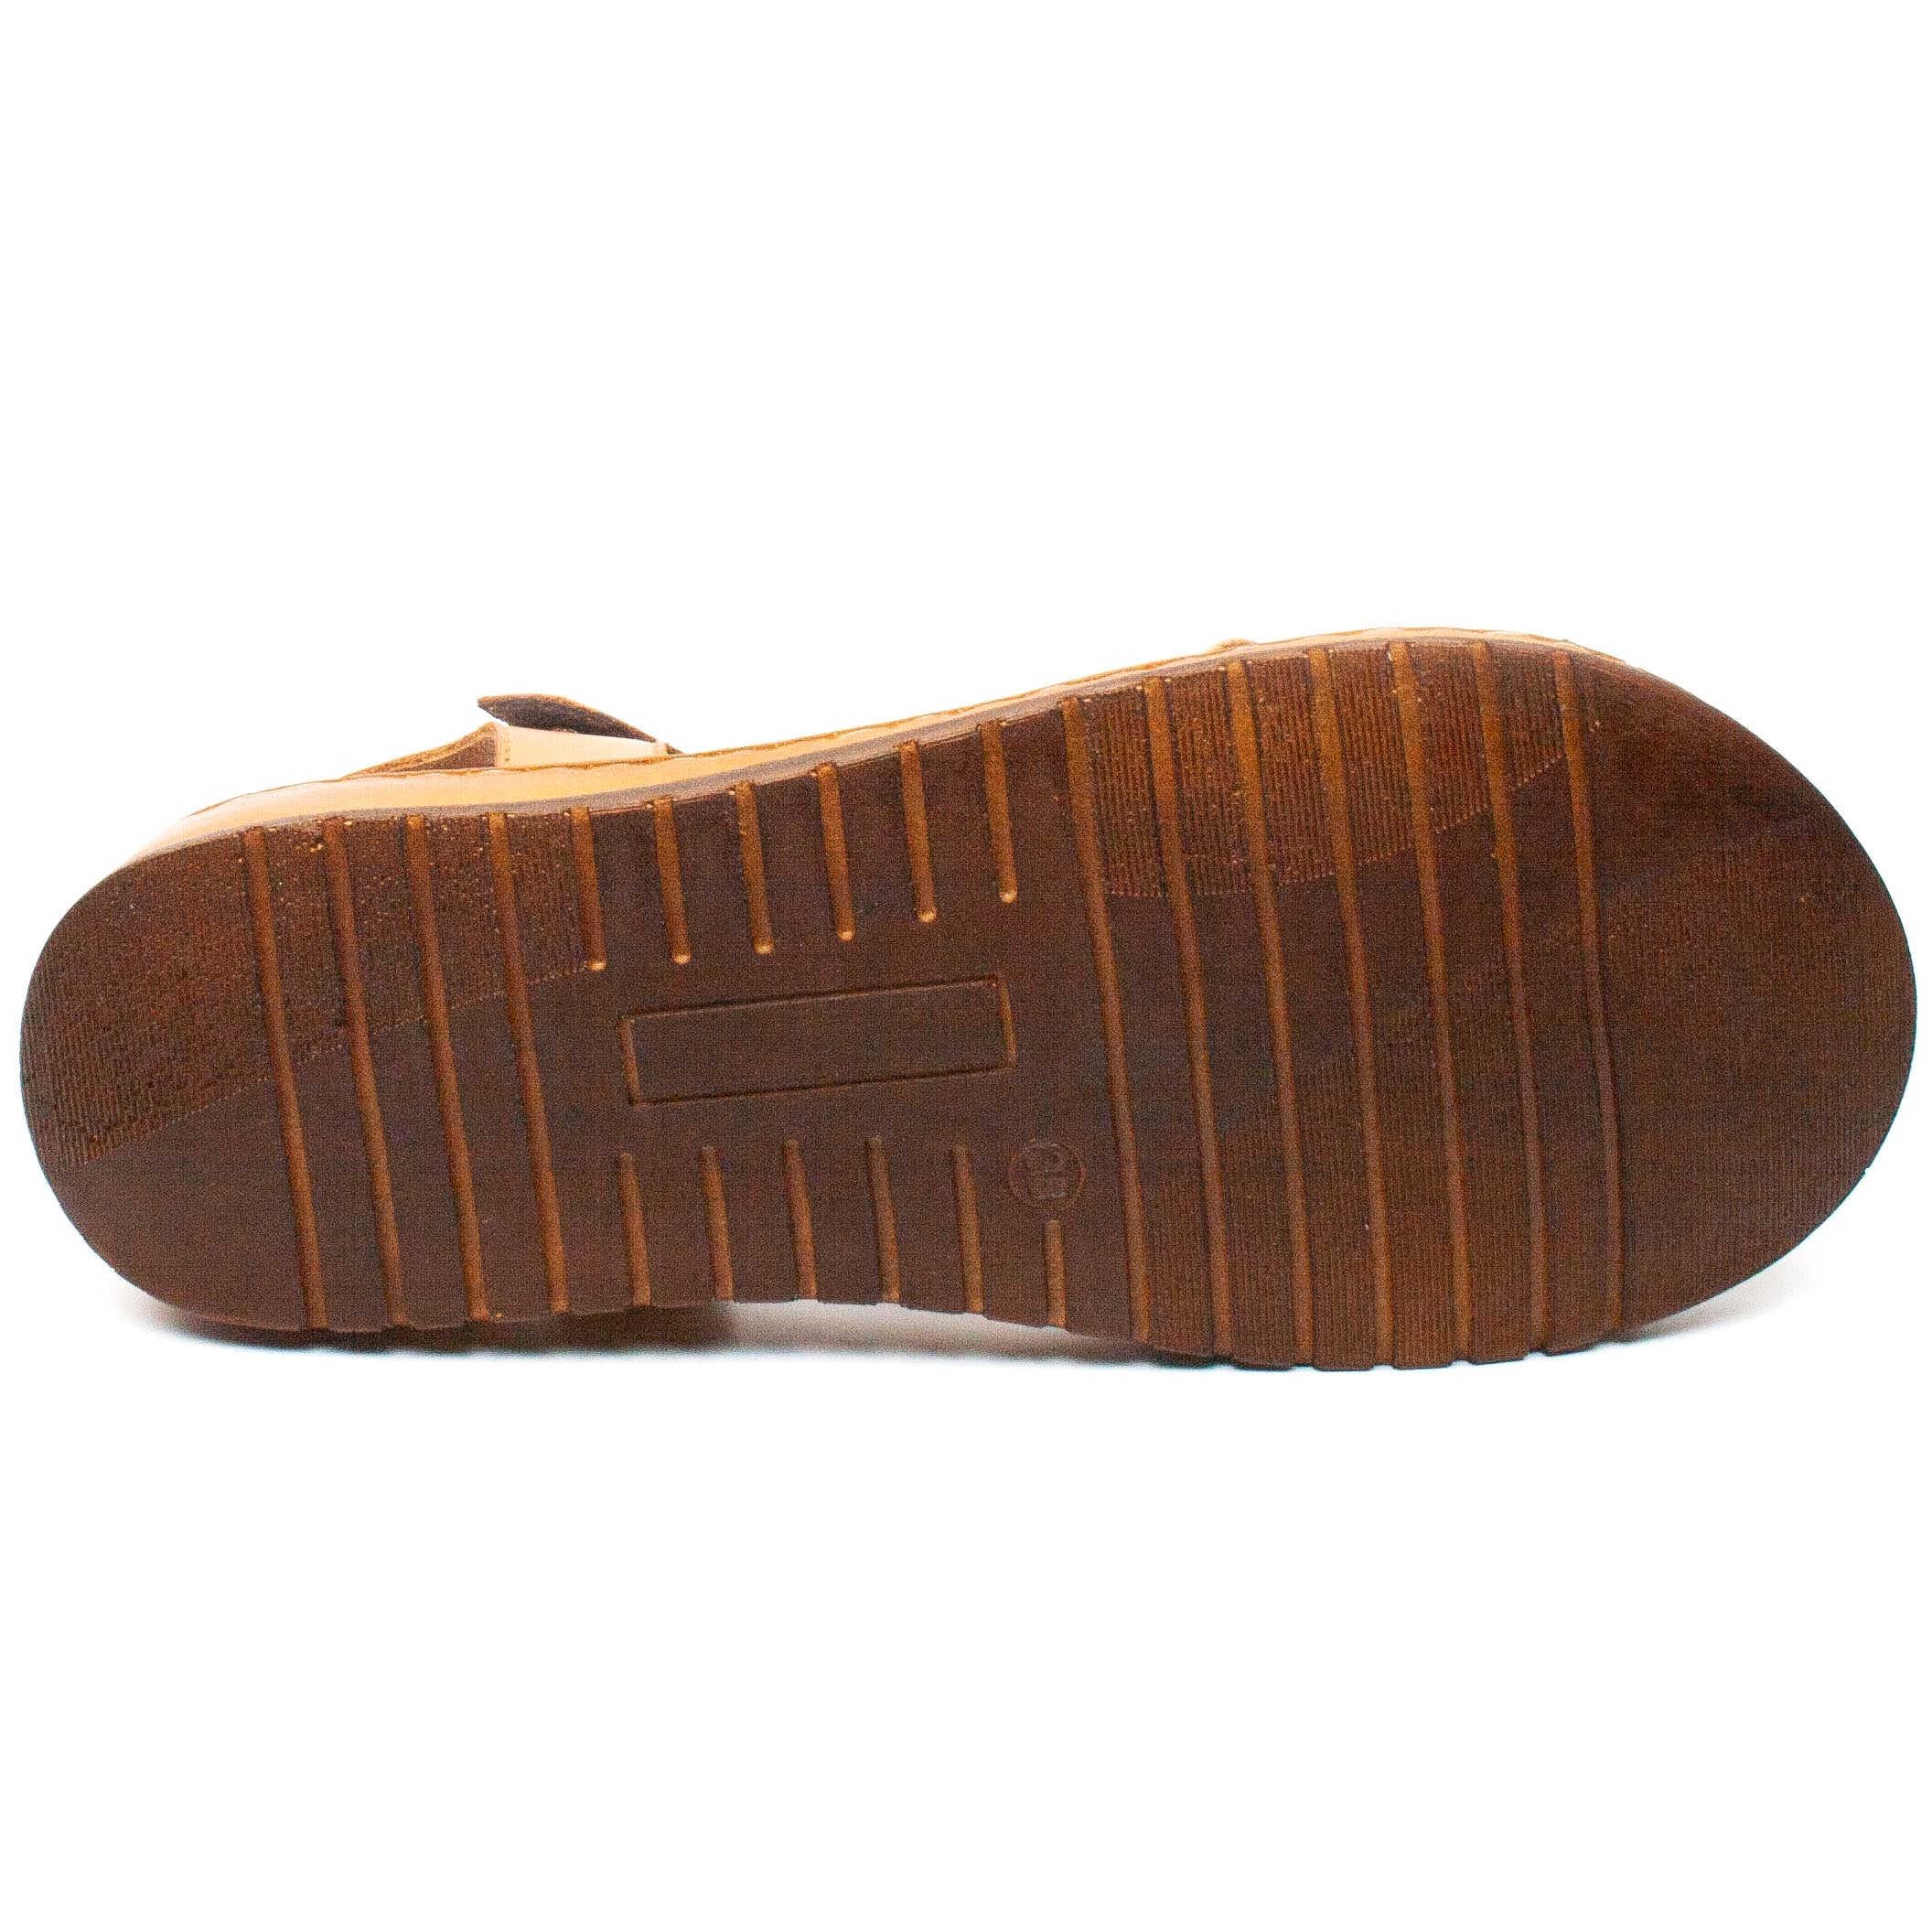 Pass Collection Sandale dama E22133 02 N maro ID2561-MARO